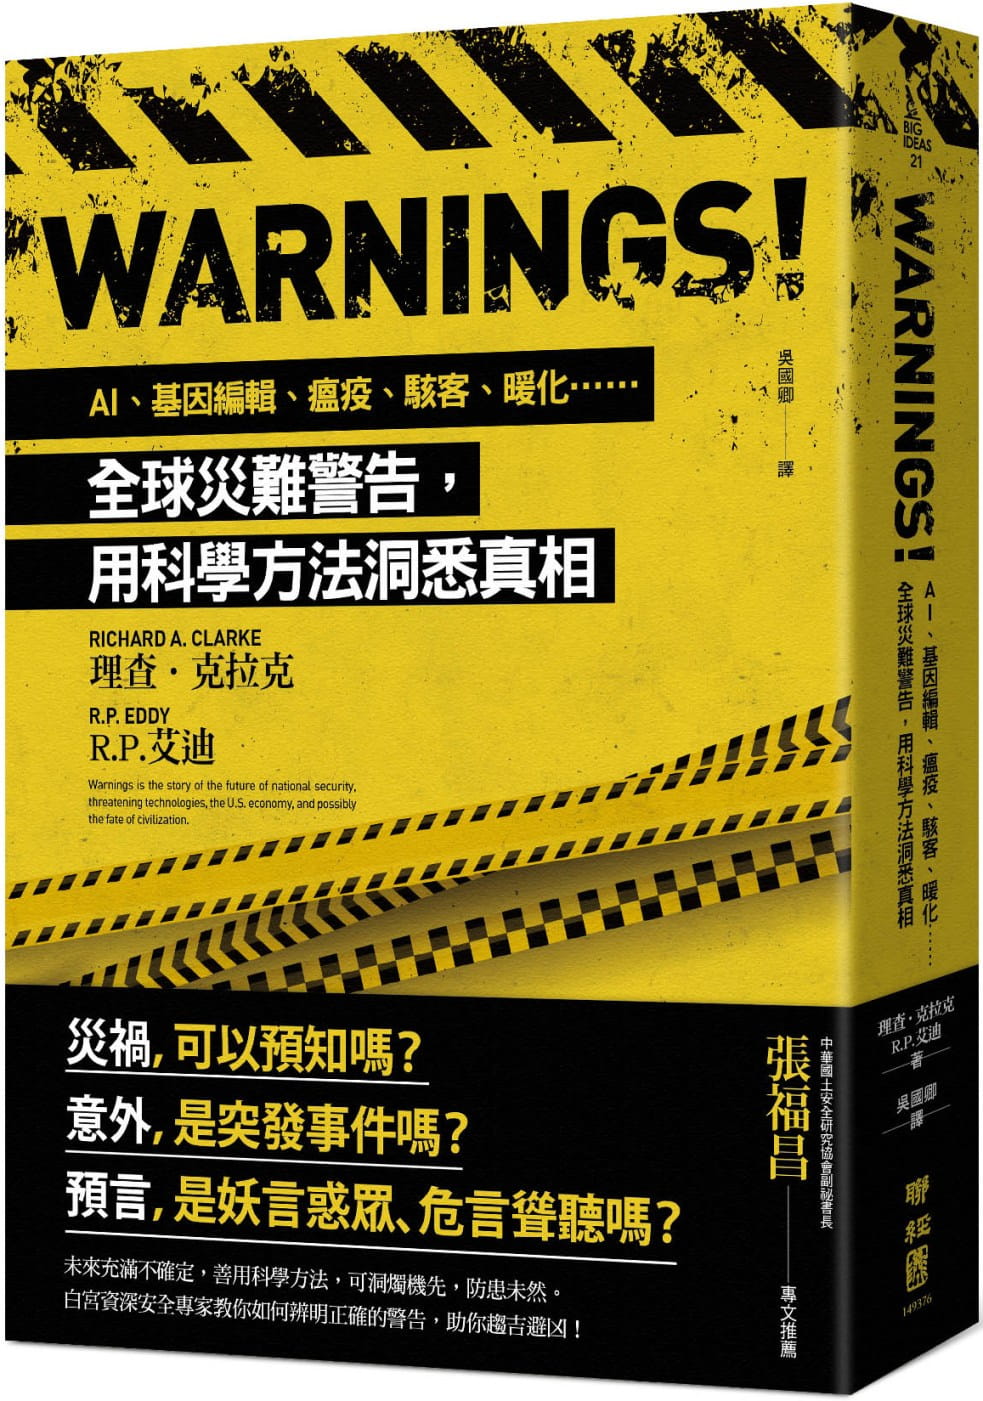 Warnings！：AI、基因編輯、瘟疫、駭客、暖化……全球災難警告，用科學方法洞悉真相